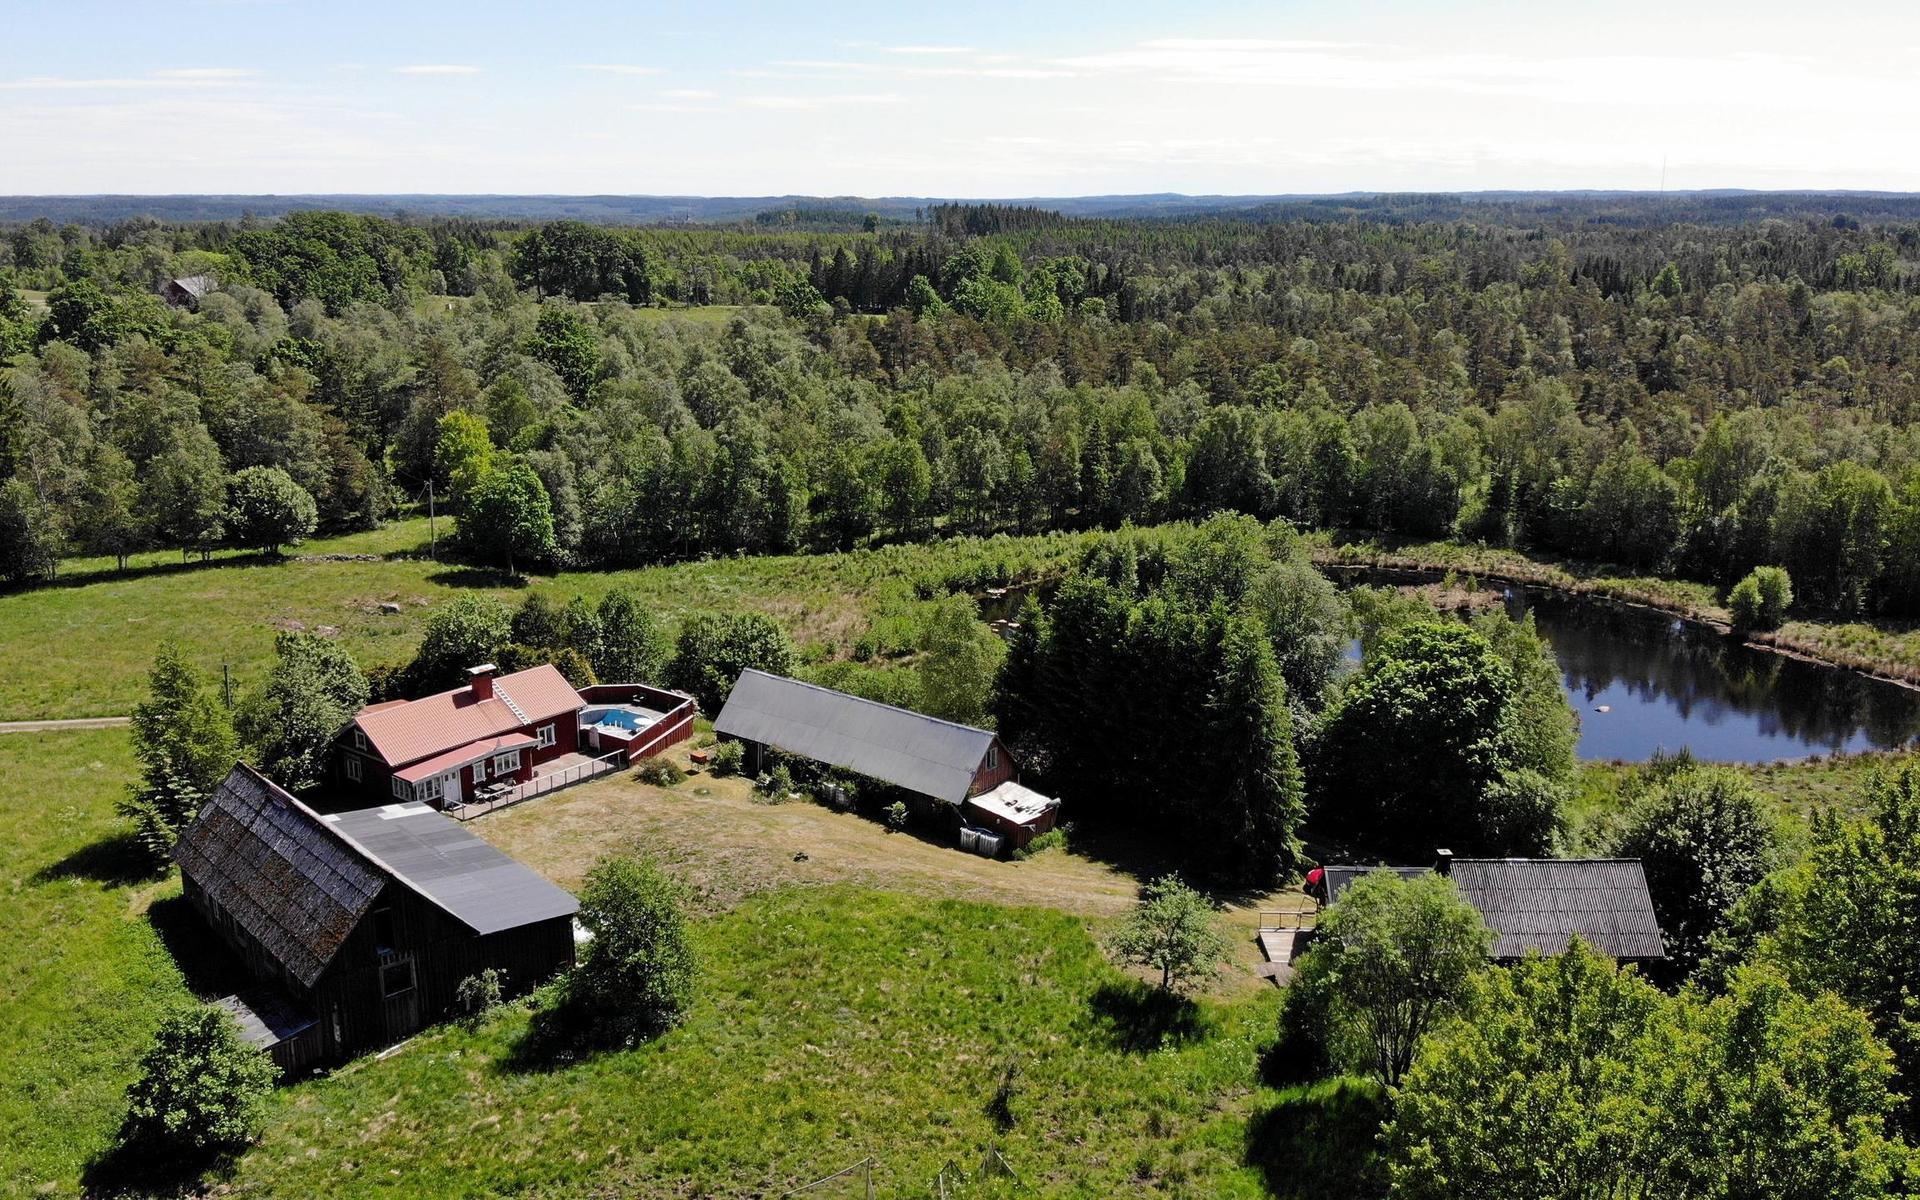 21 764 klick. Gammelgård 1, Torup, Hylte kommun. Begärt pris 1 450 000, såldes för 1,4 miljoner.